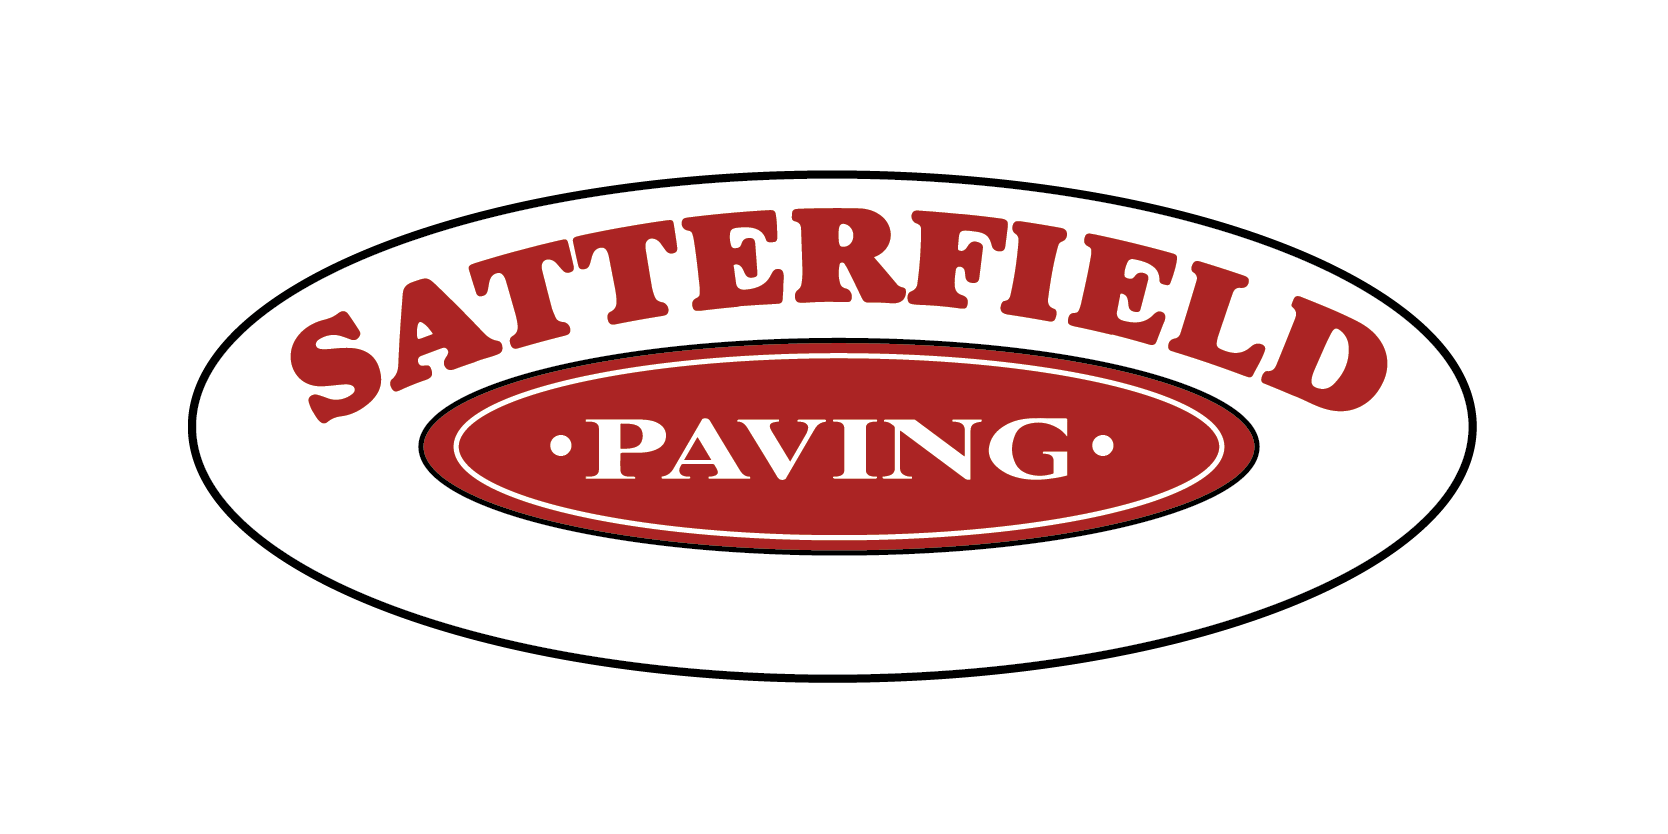 Satterfield Paving